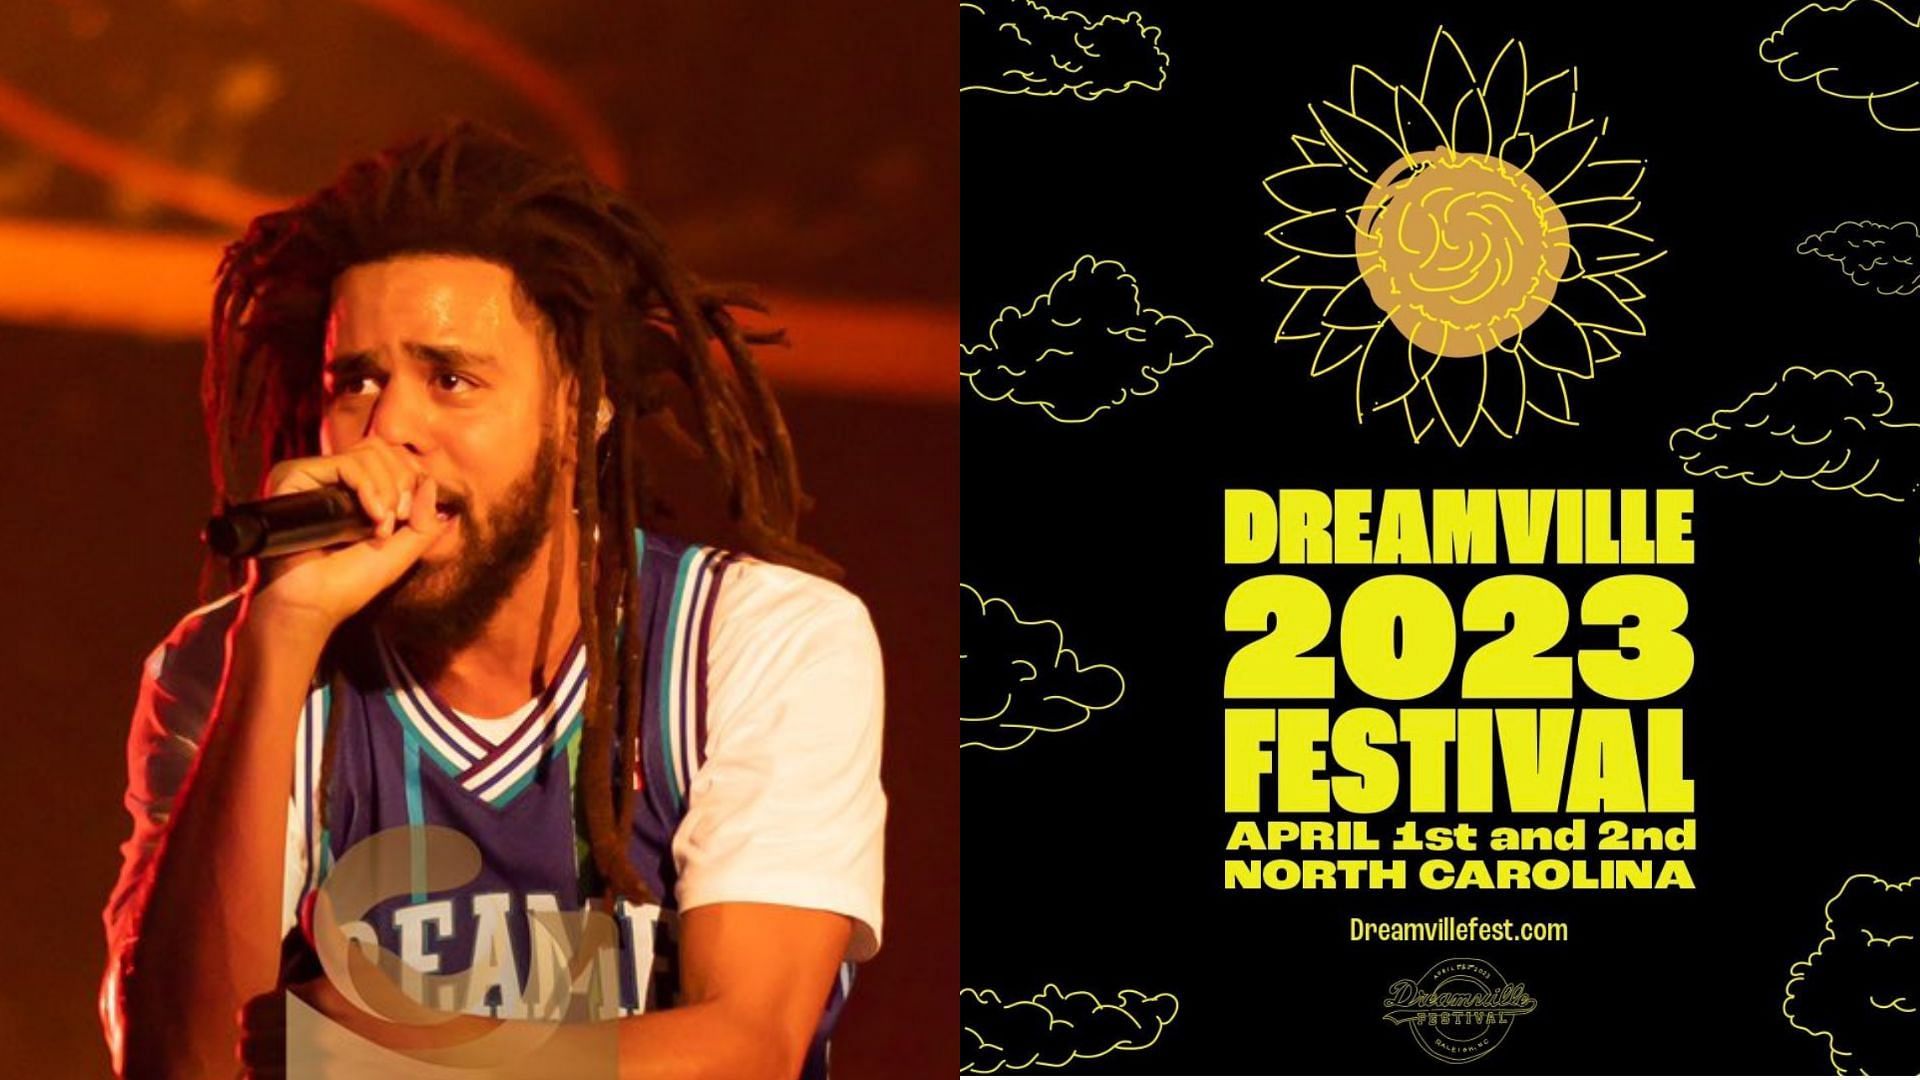 J. Cole Dreamville Music Festival 2023 Tickets, presale, dates, and more